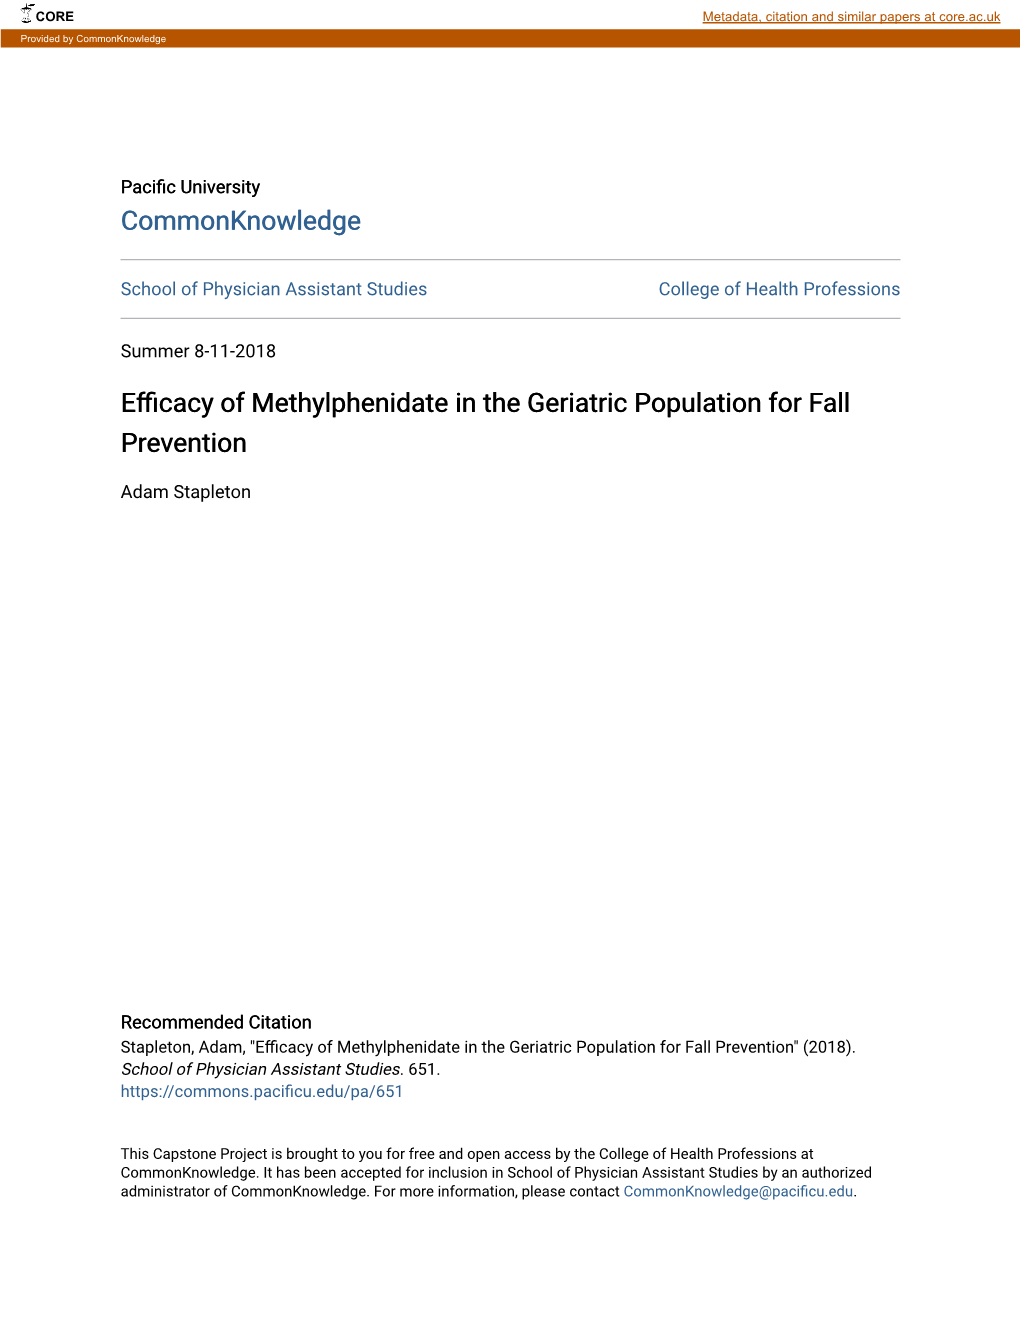 Efficacy of Methylphenidate in the Geriatric Population for Fall Prevention